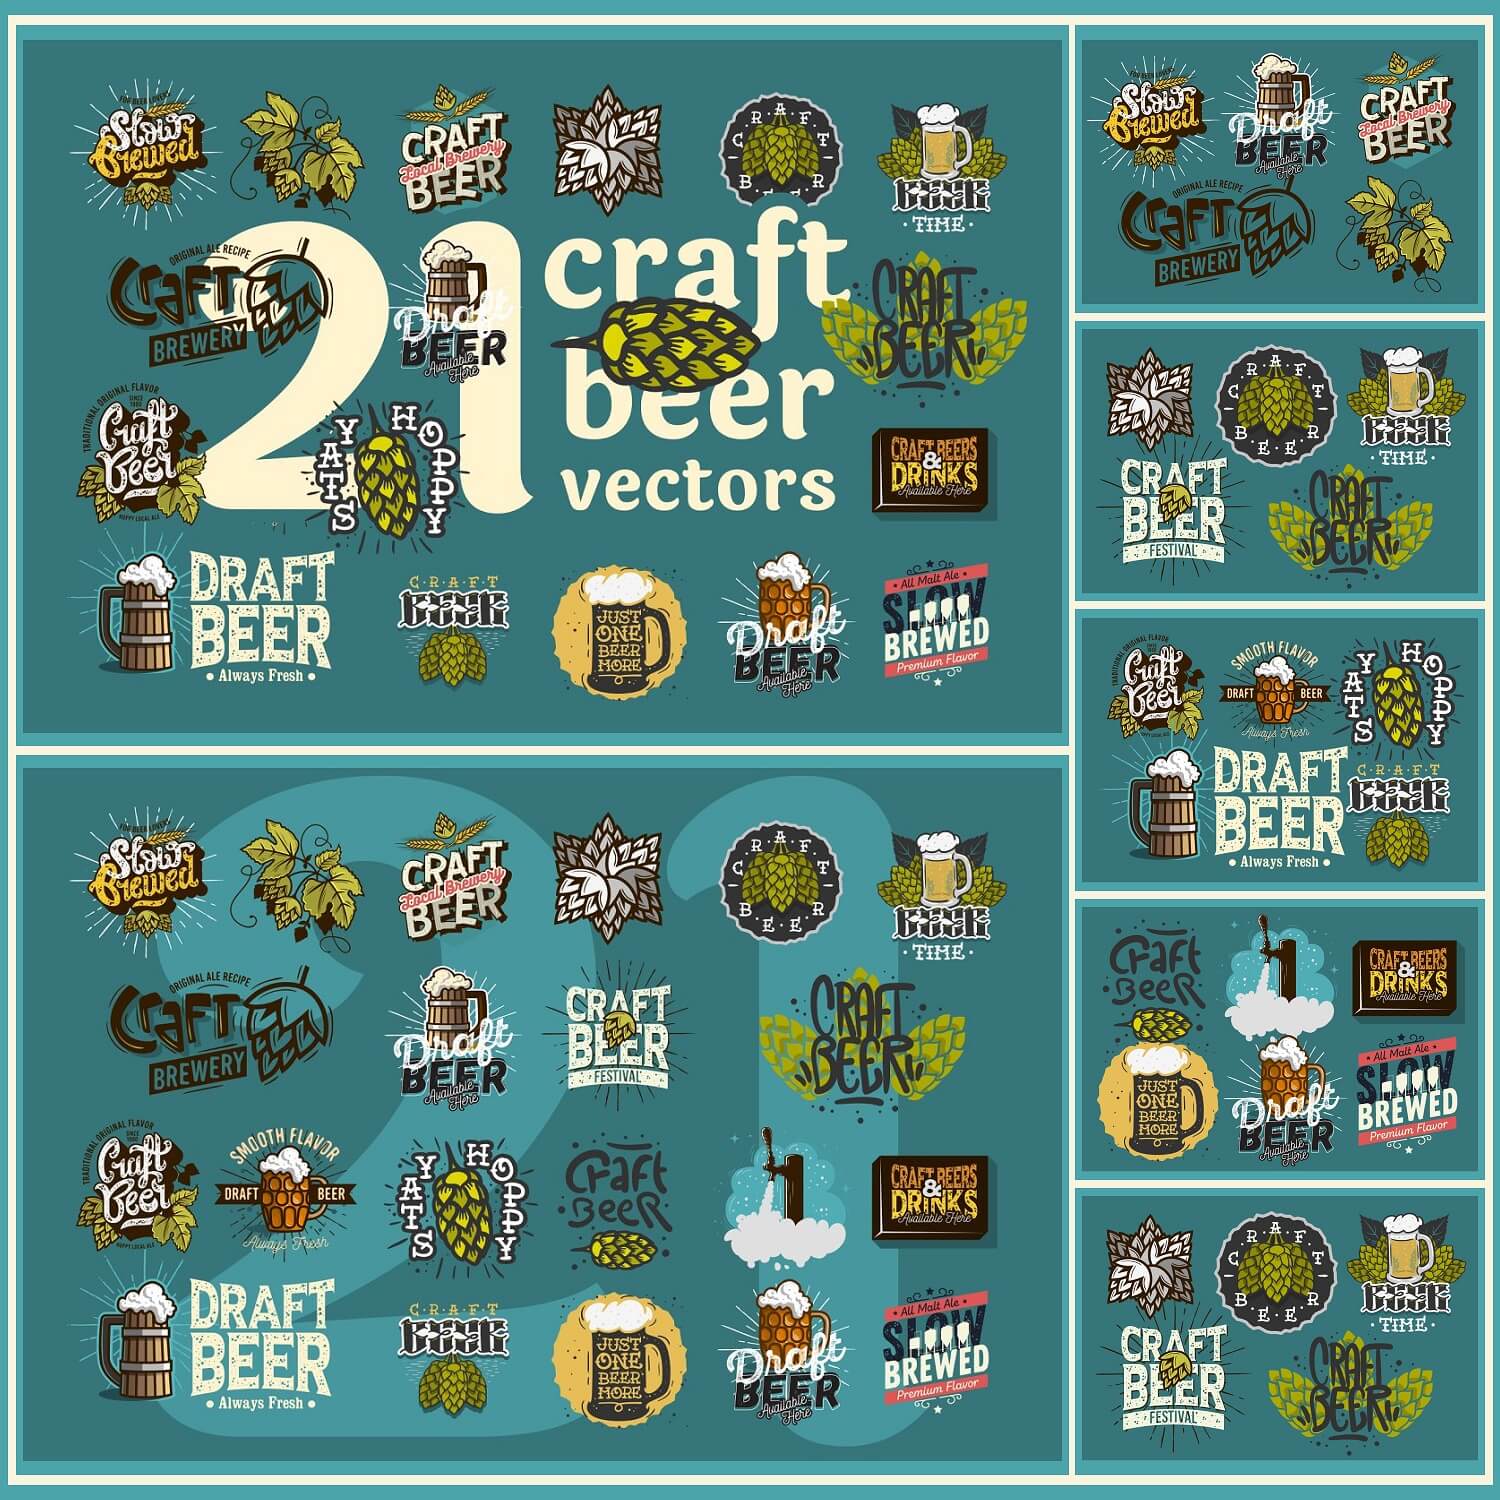 21 craft beer vectors on the green background.